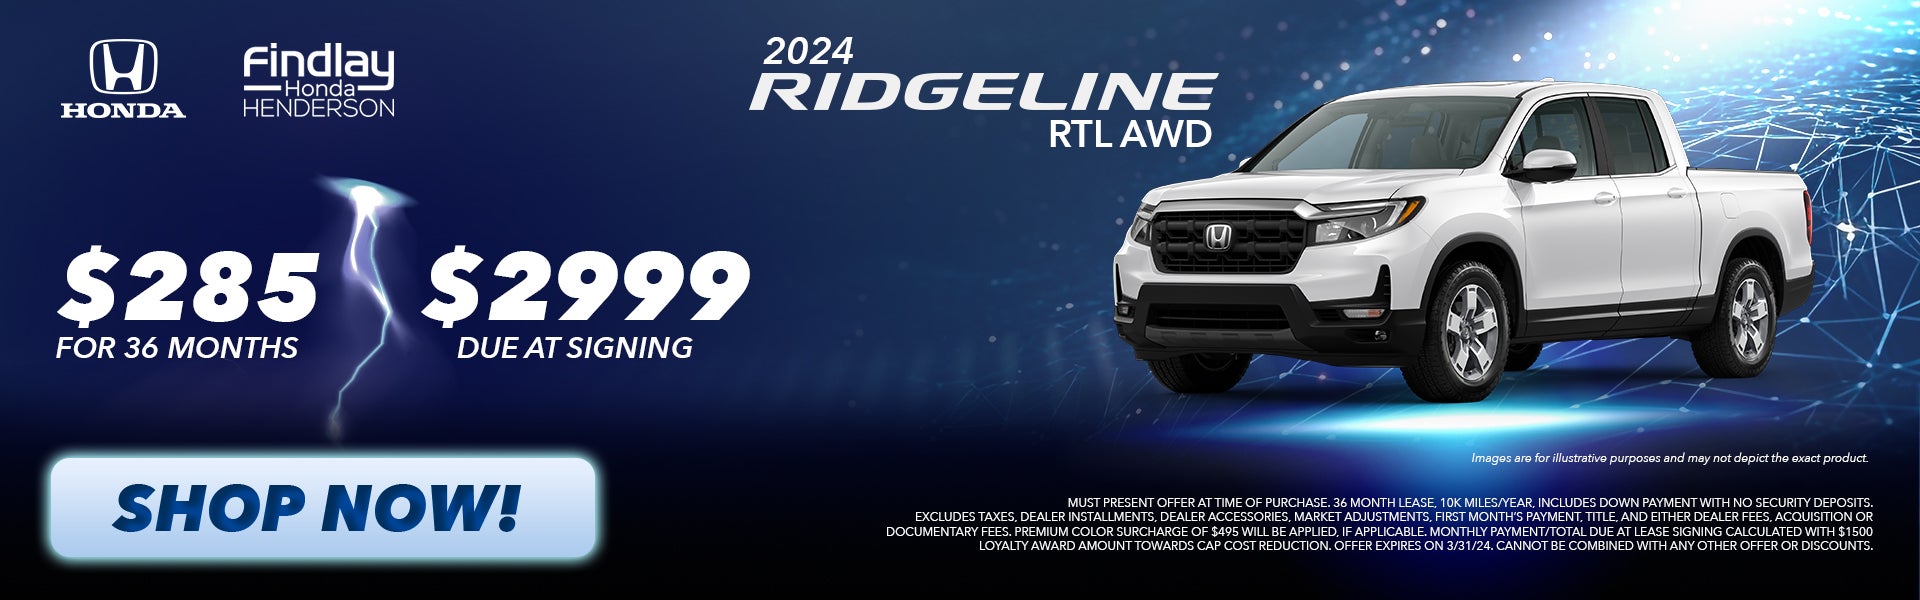 2024 Ridgeline RTL AWD